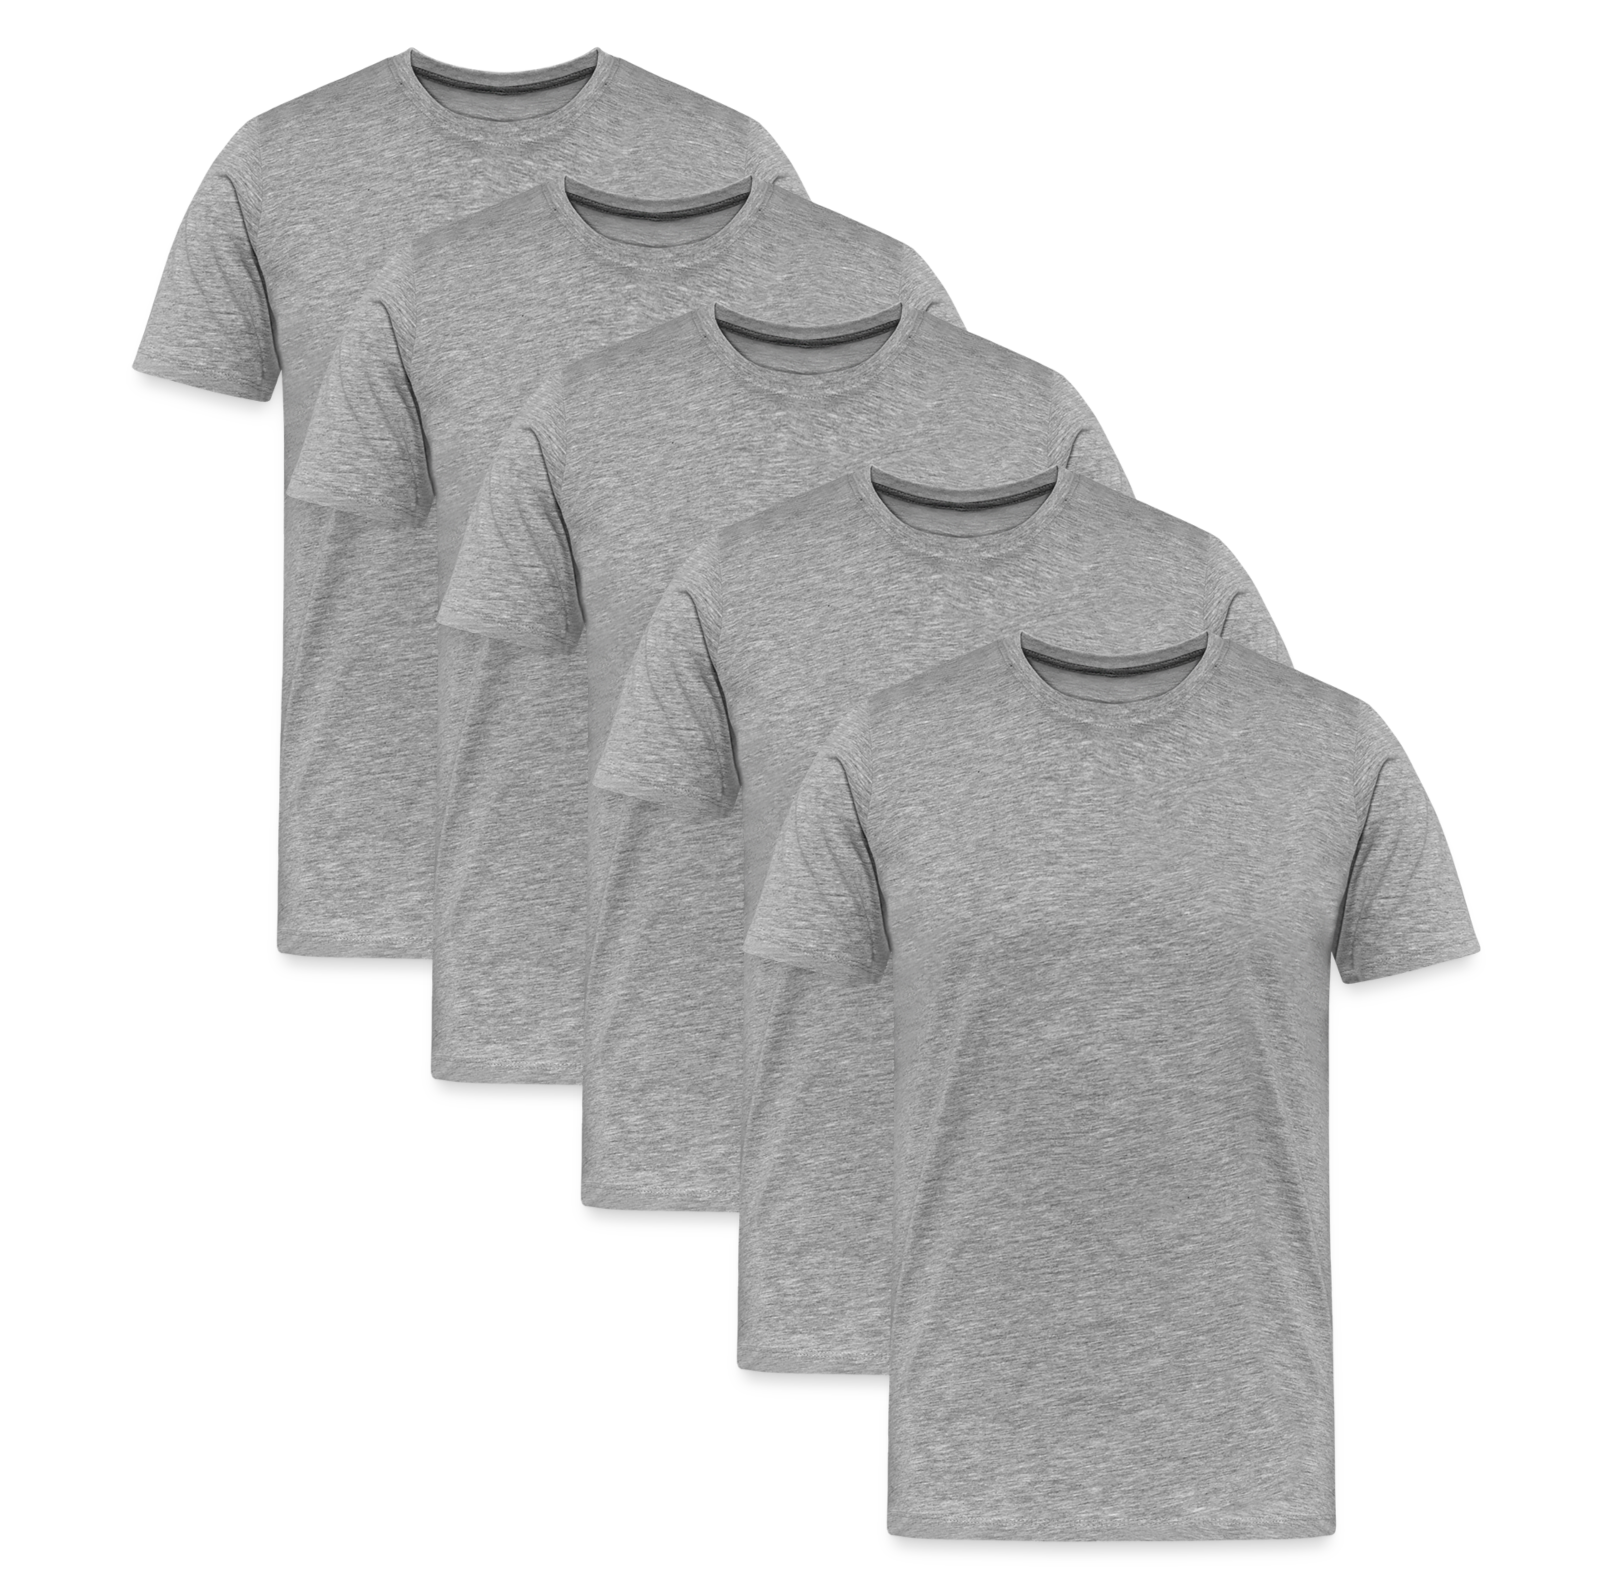 Fluent Tee 5-Pack - Men's Premium T-Shirt from fluentclothing.com